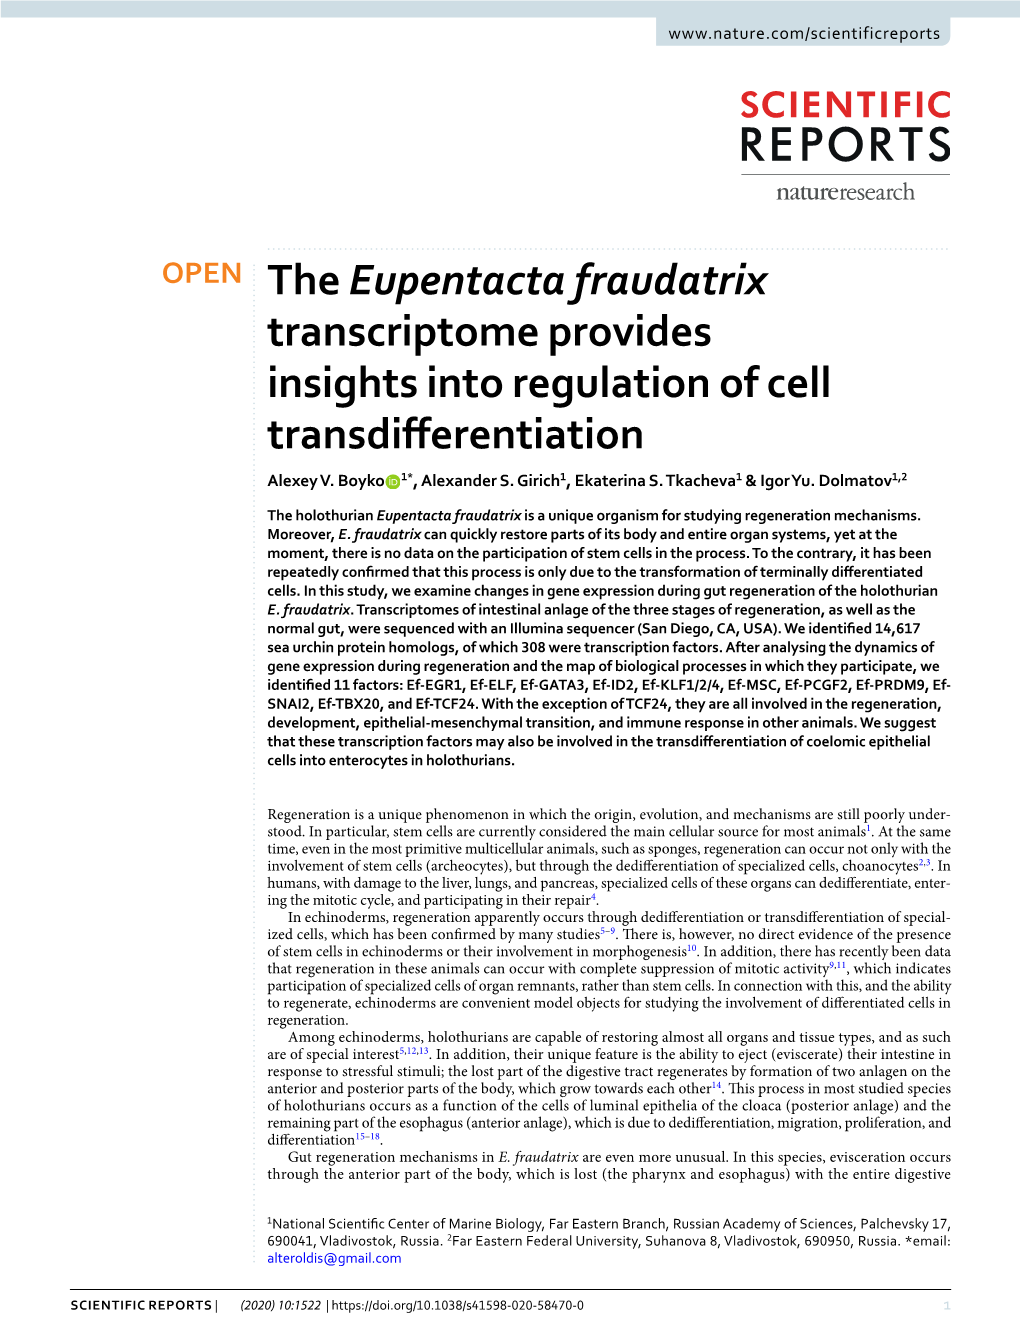 The Eupentacta Fraudatrix Transcriptome Provides Insights Into Regulation of Cell Transdiferentiation Alexey V